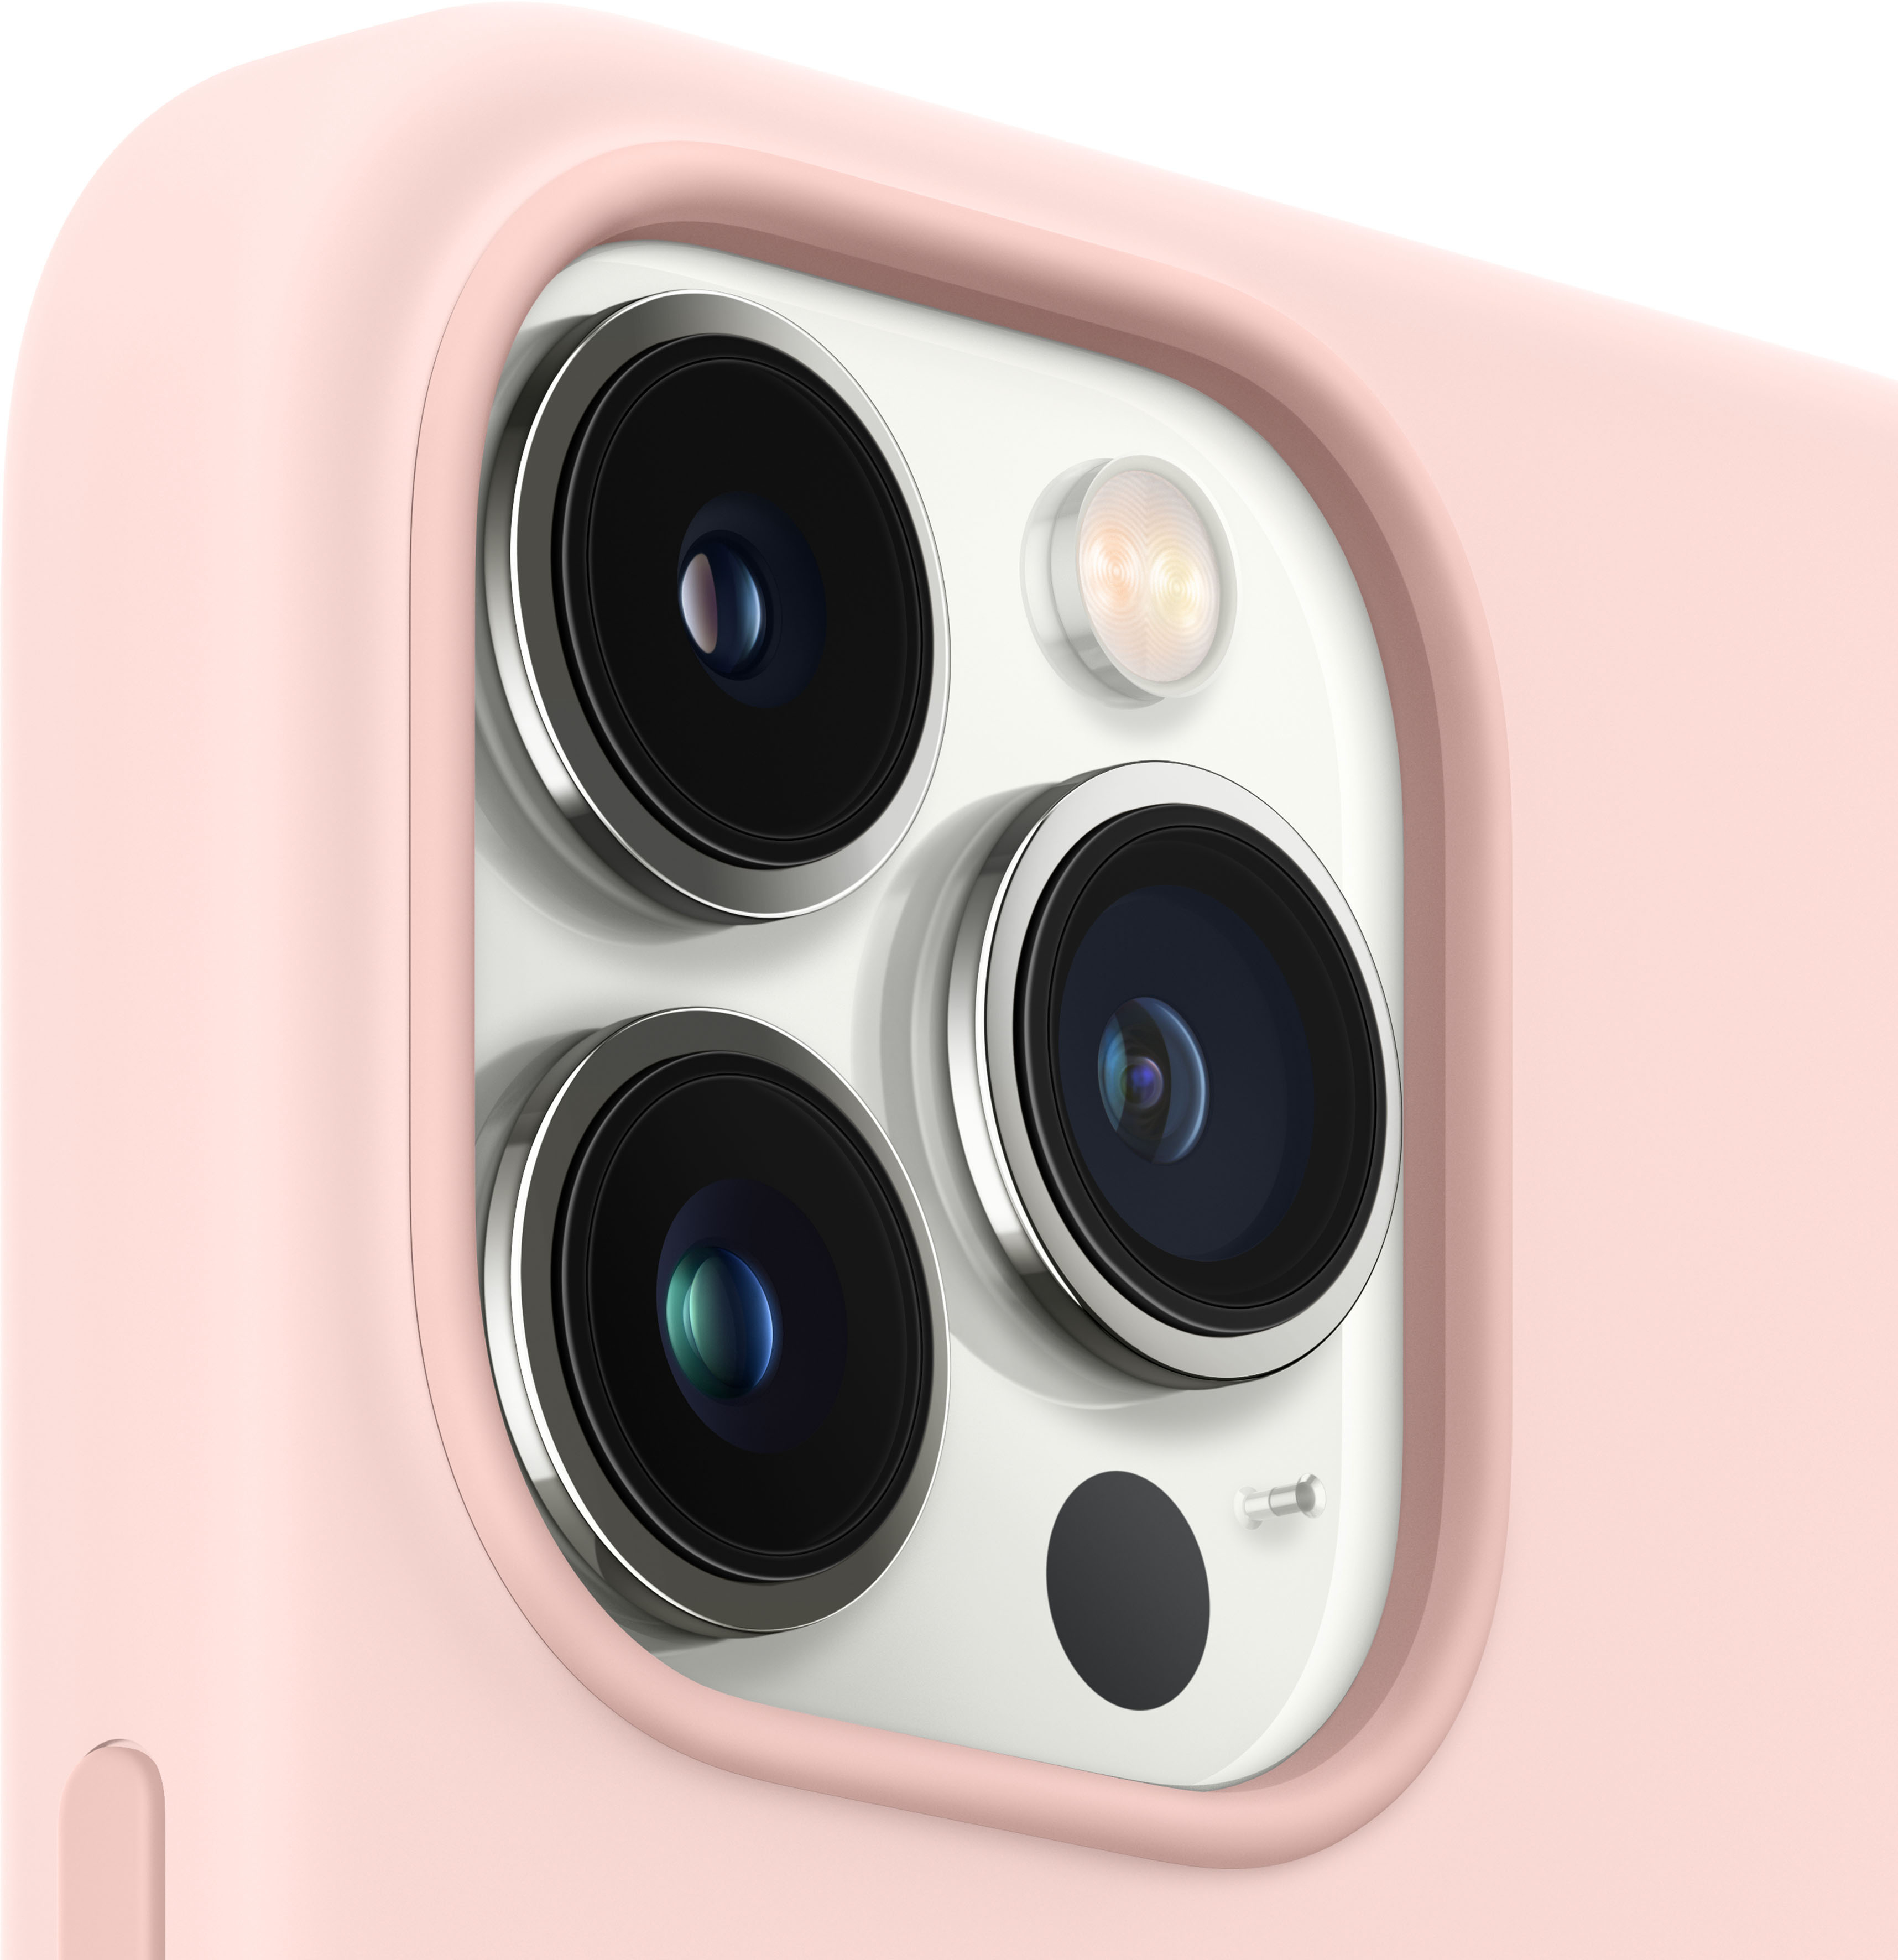 Silicone Case iPhone 13 Pro Max Color Rosa Fluo - iPhone Store Cordoba